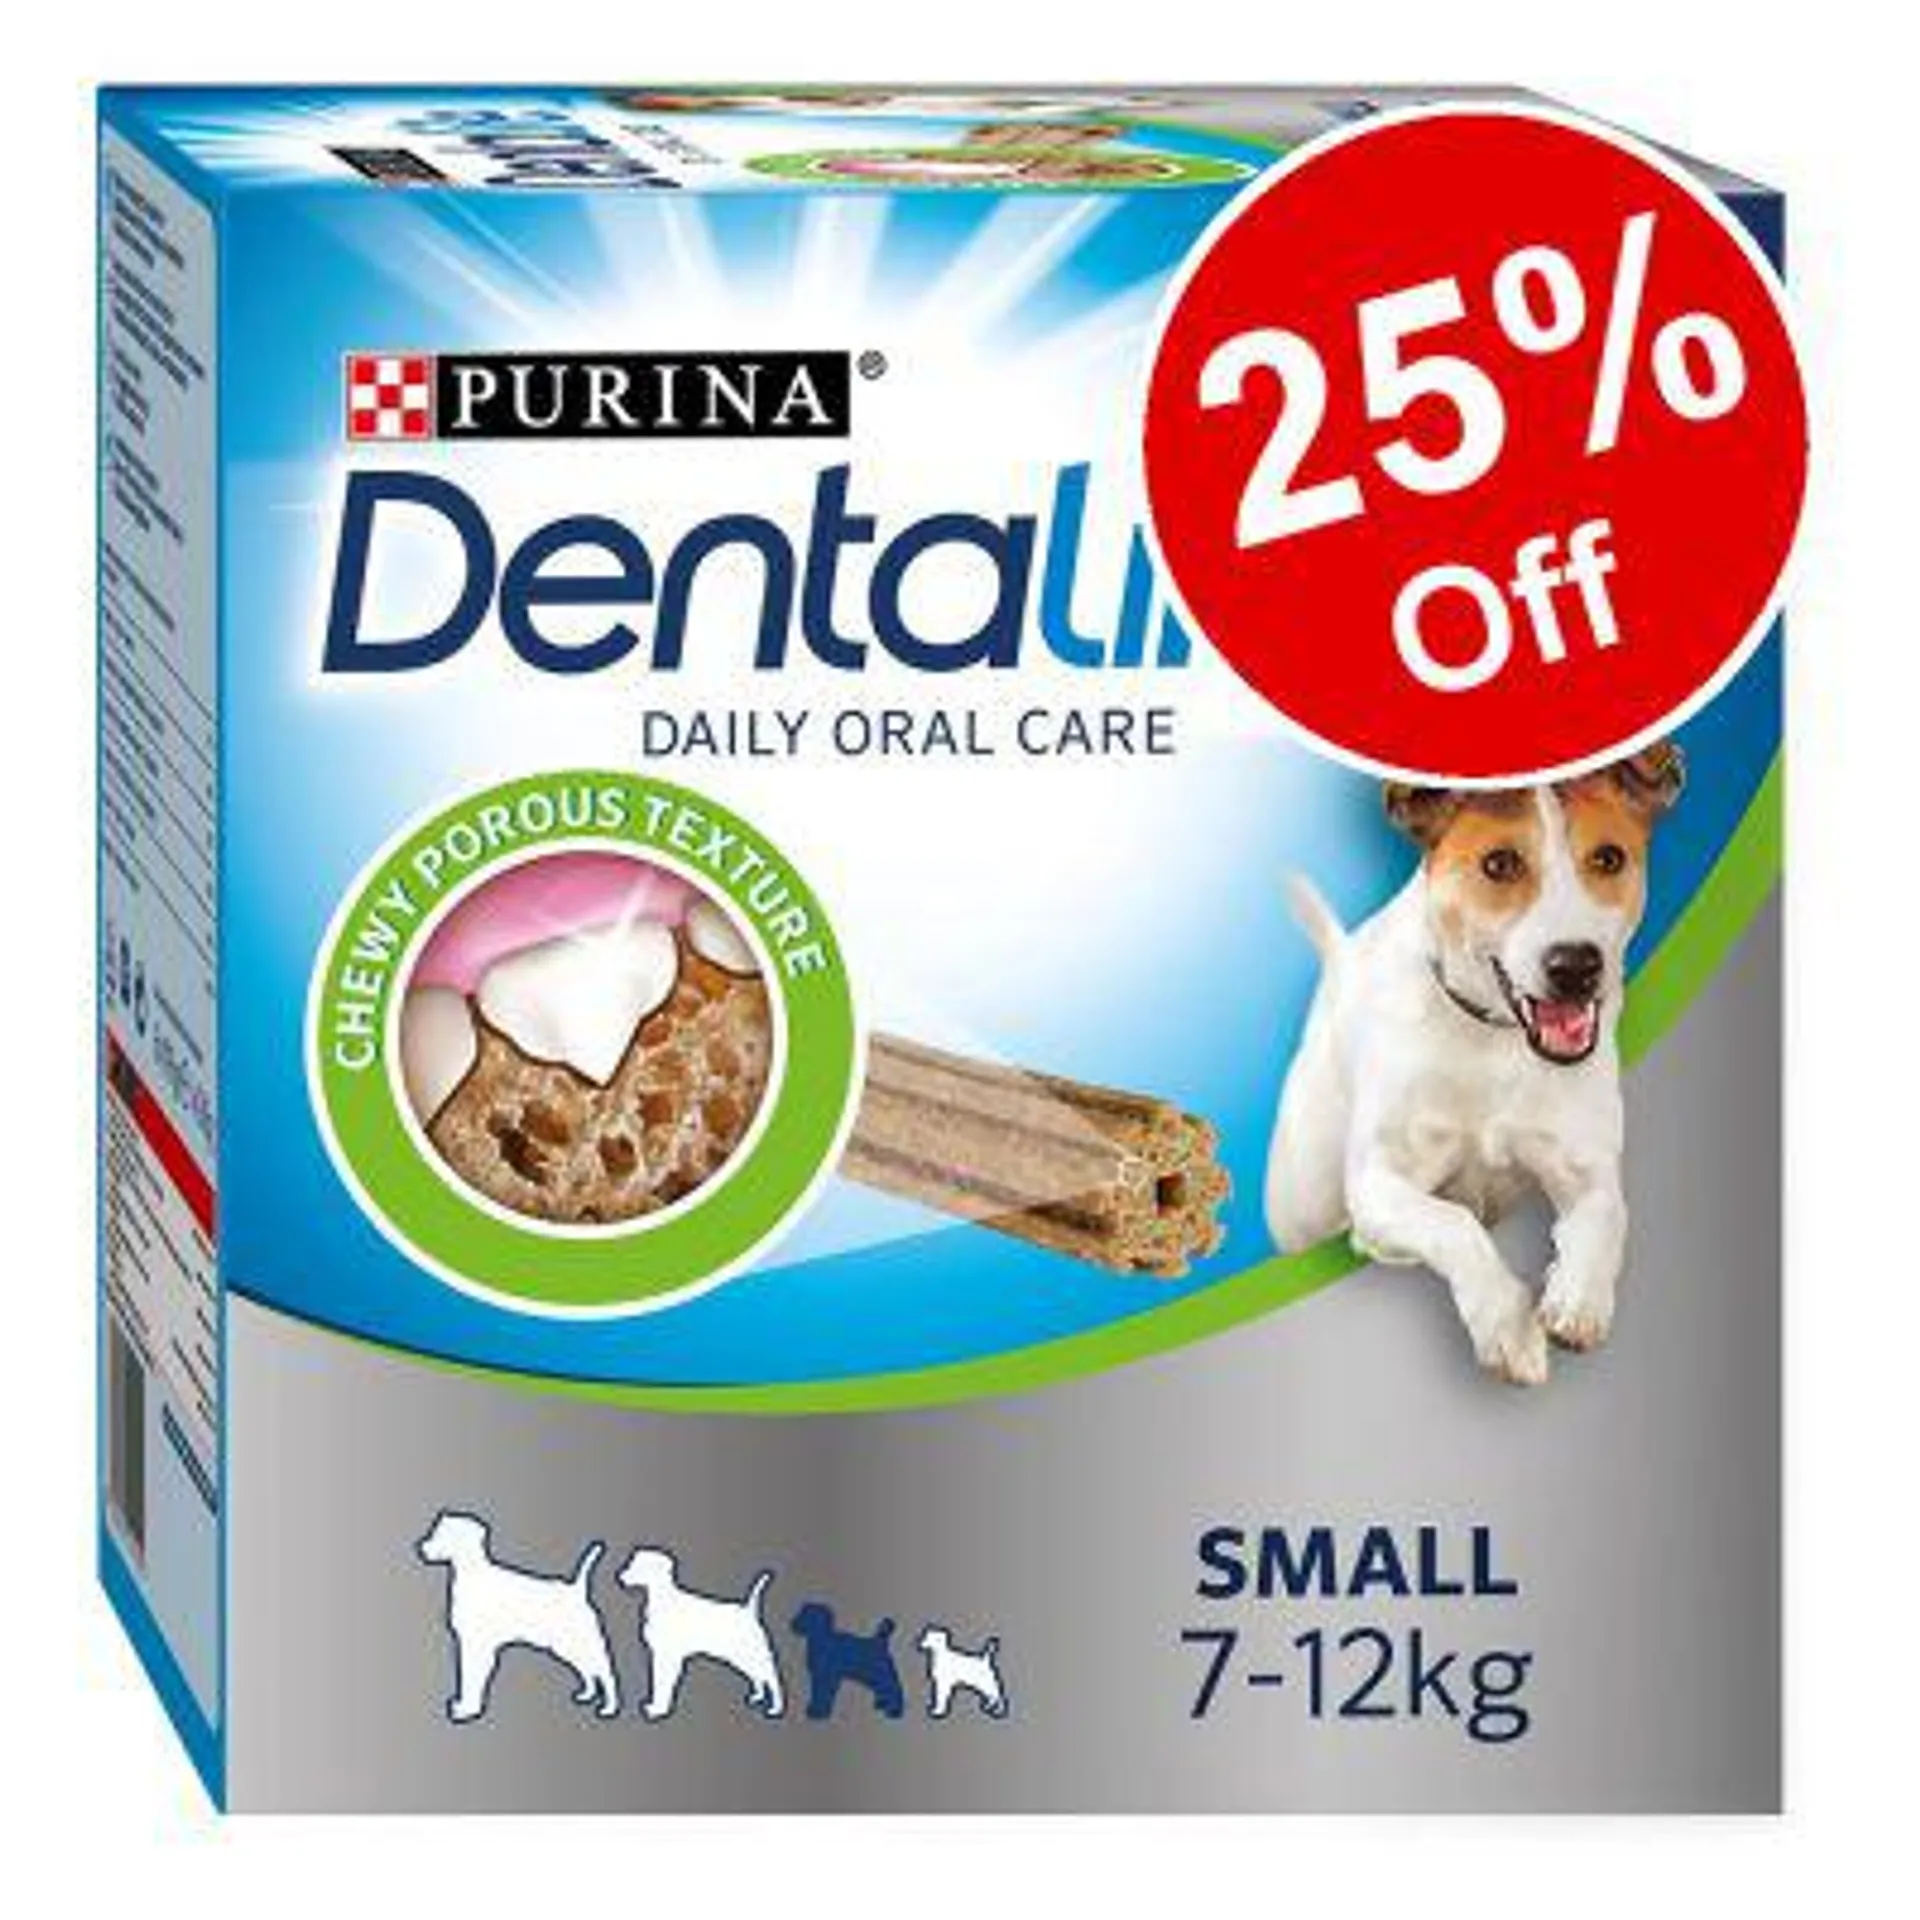 2 x Purina Dentalife Daily Dental Care Dog Snacks - 25% Off!*